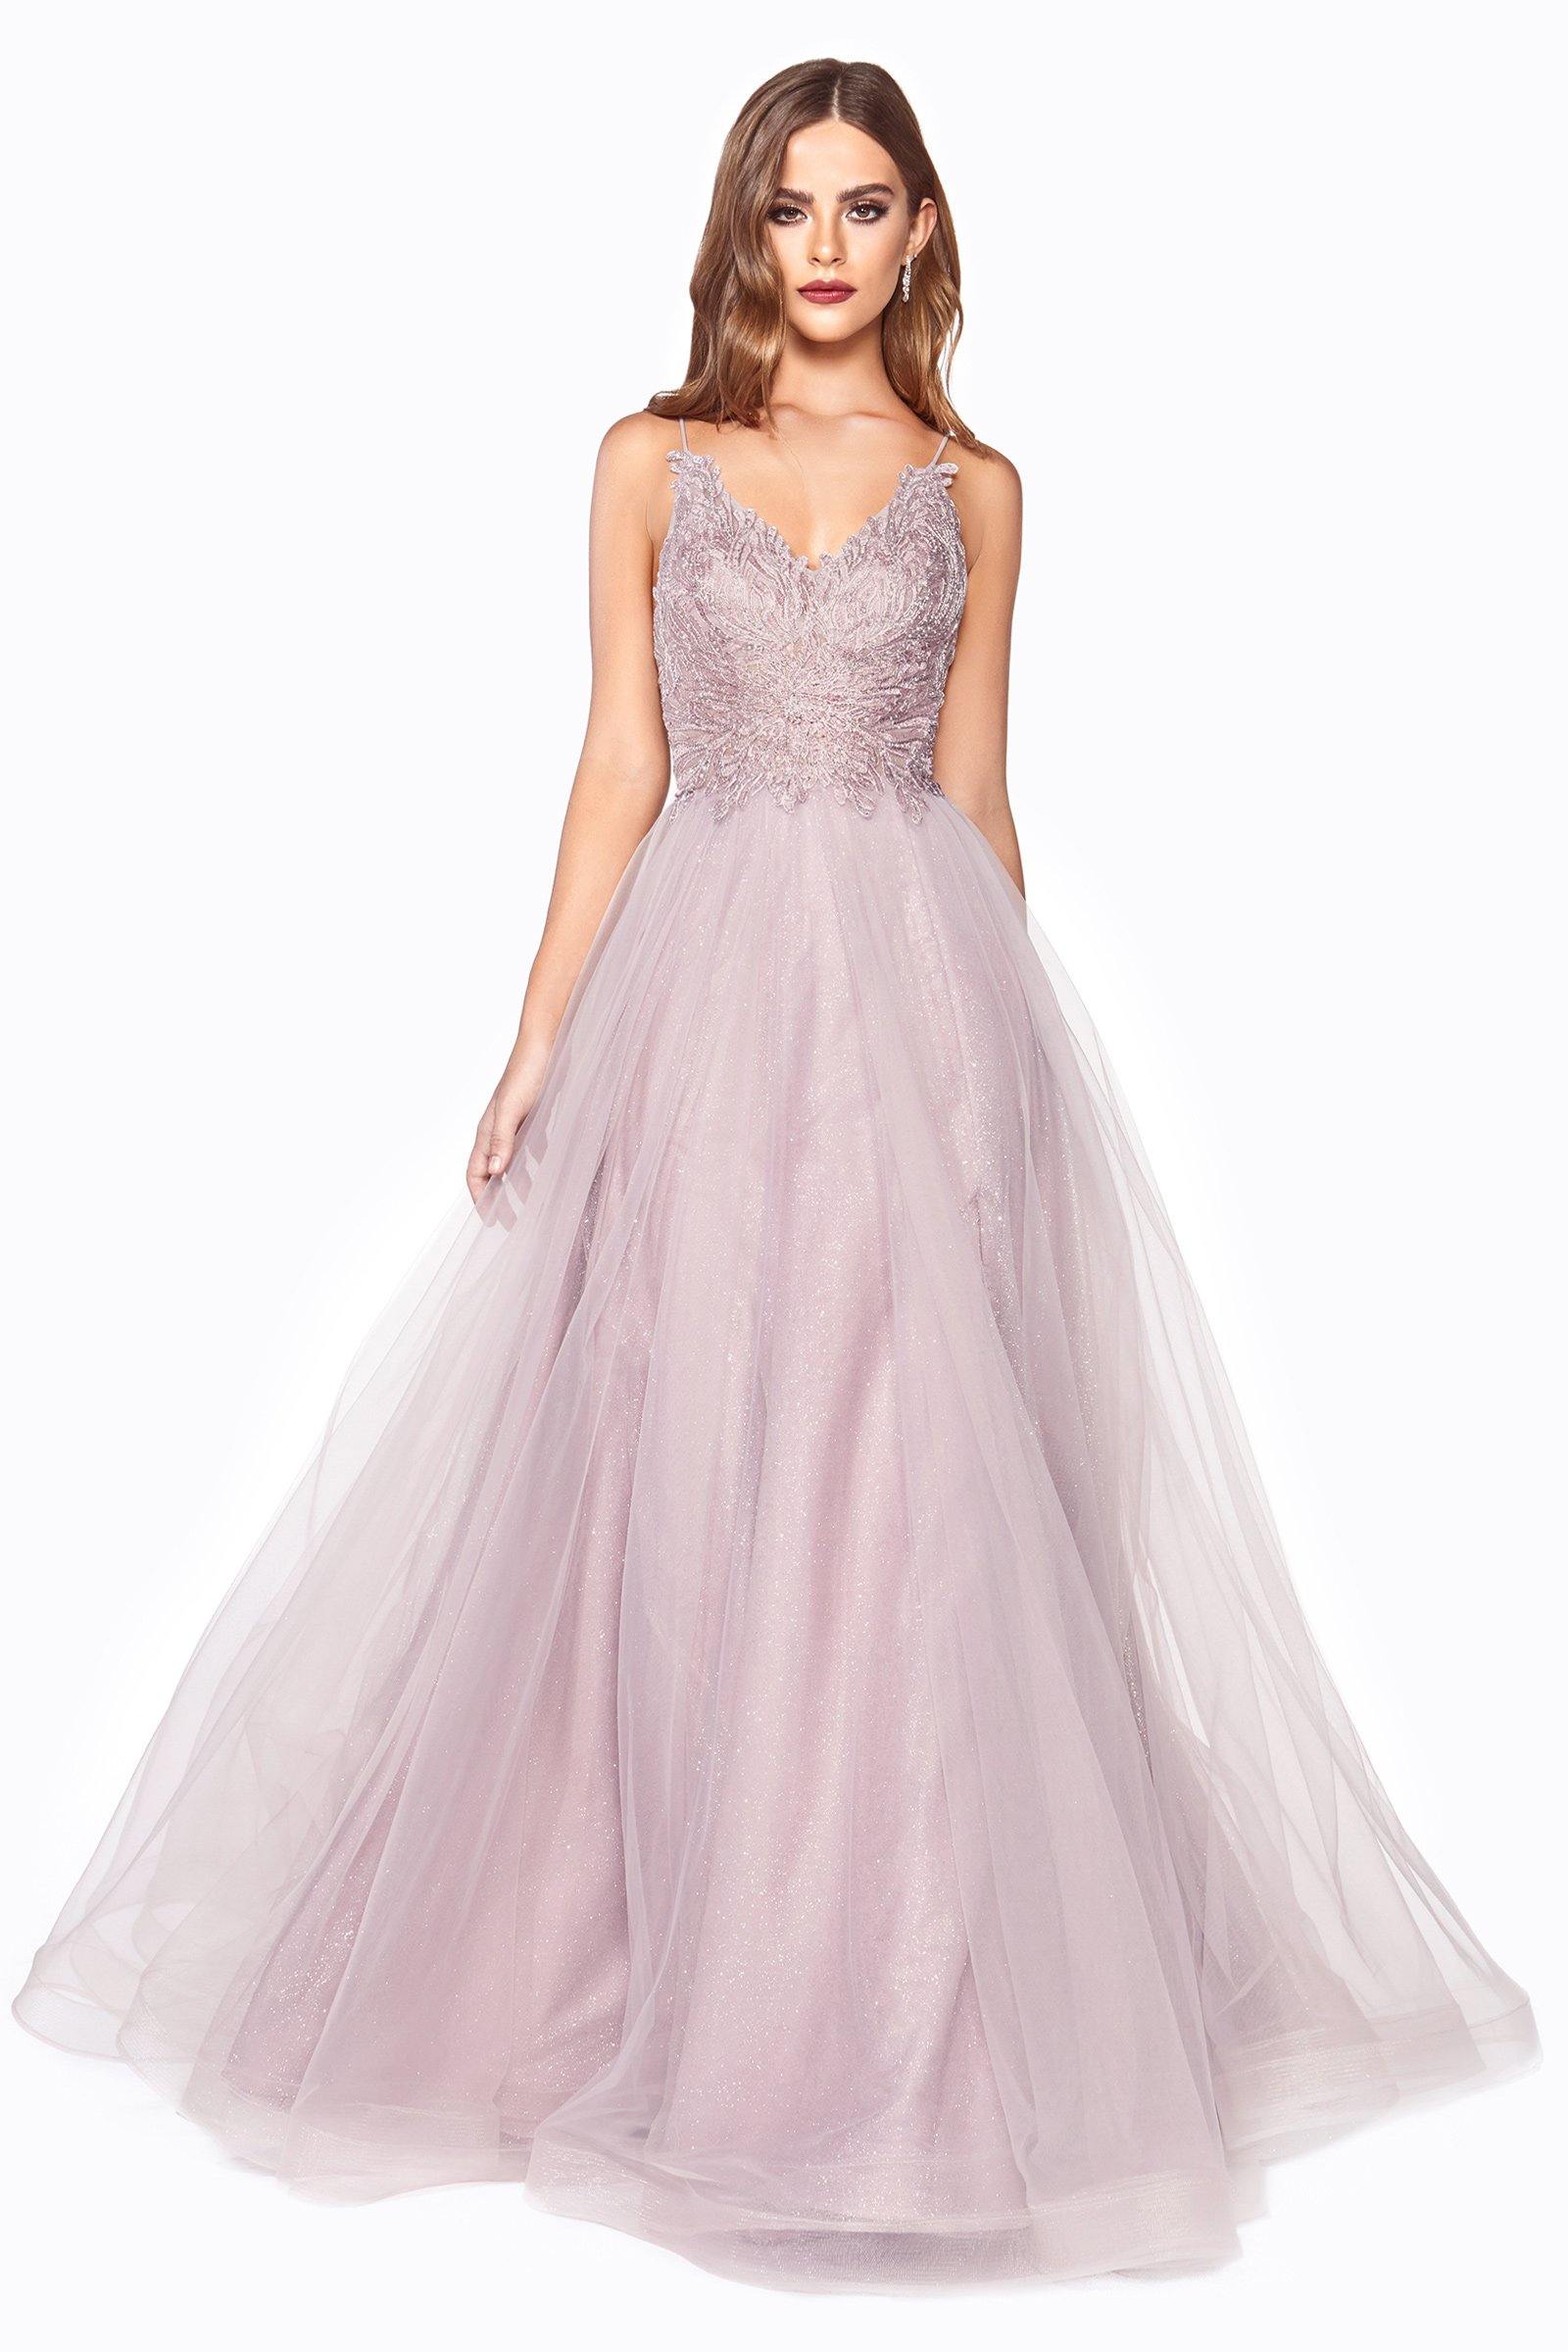 Prom Long Formal Lace Applique Evening Dress - The Dress Outlet Cinderella Divine